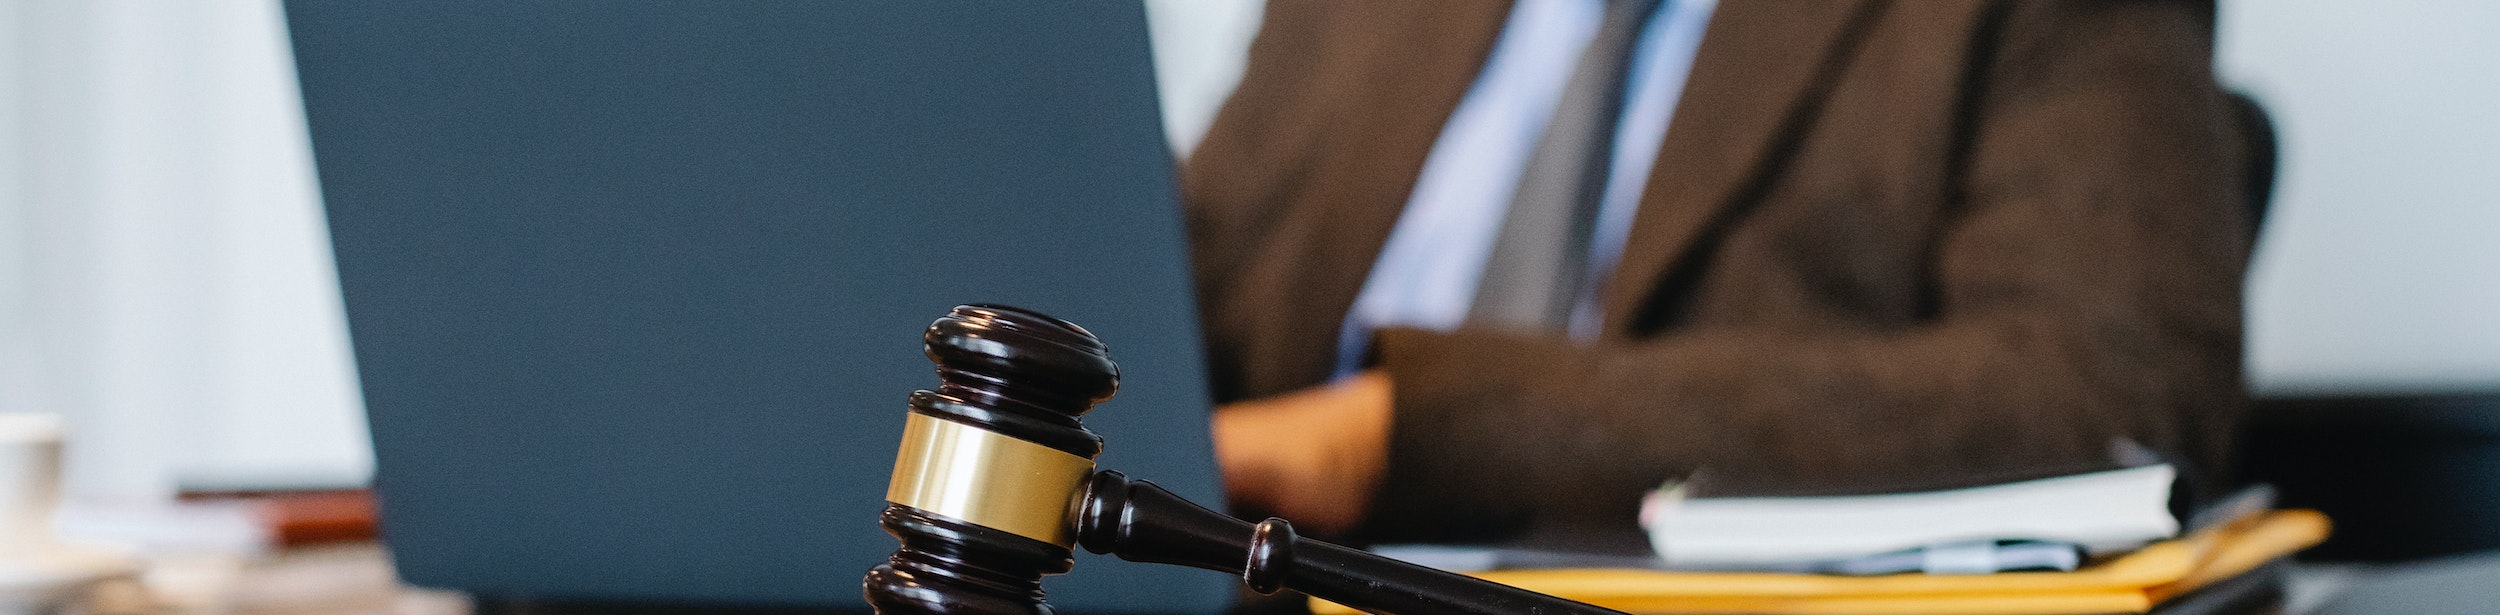 Civil Litigation and Dispute Resolution